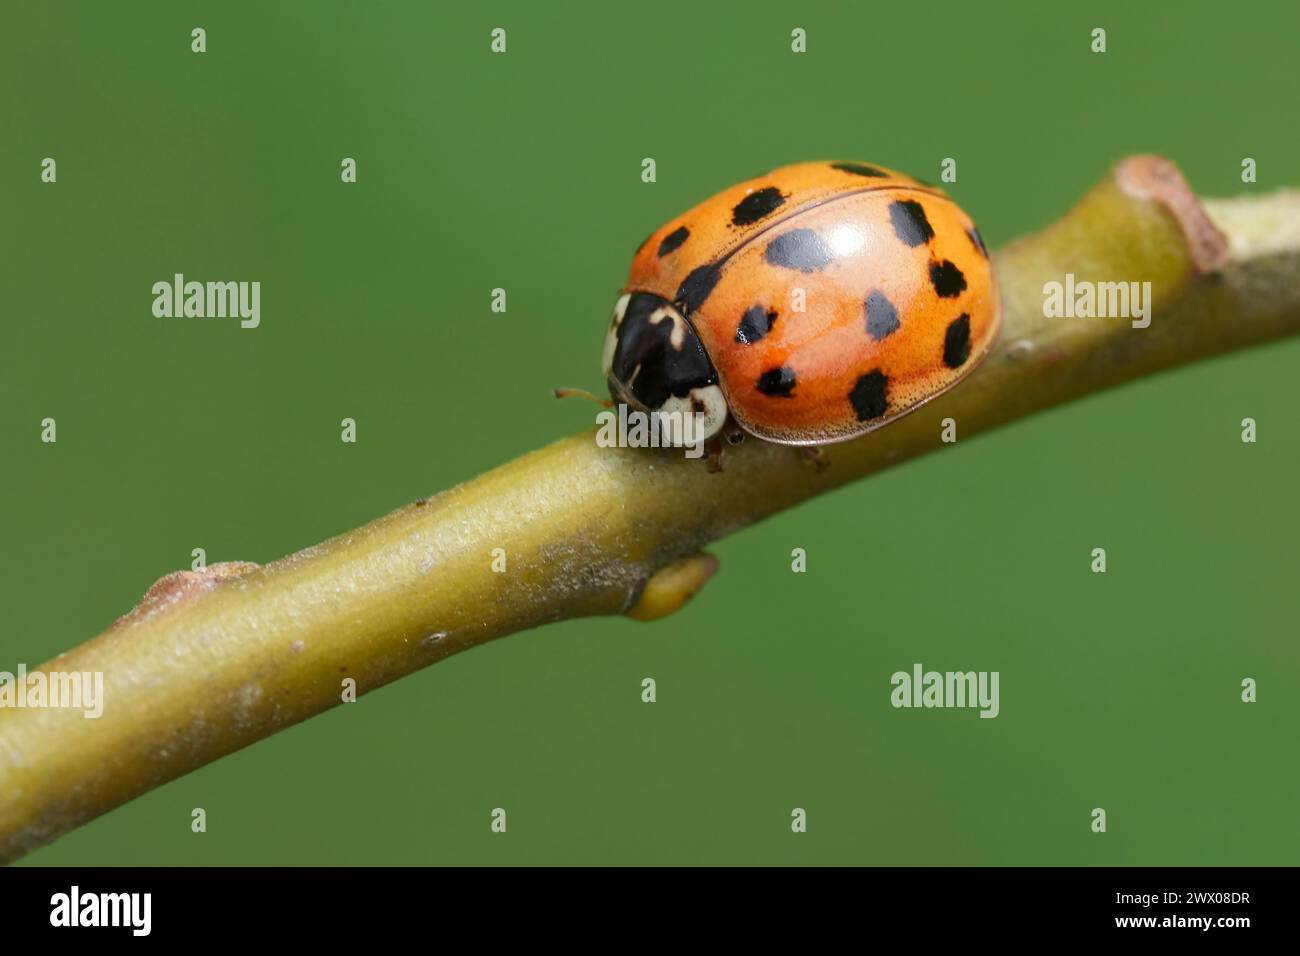 Detailed closeup on a predatory Asian ladybeetle, Harmonia axyridis on a twig Stock Photo